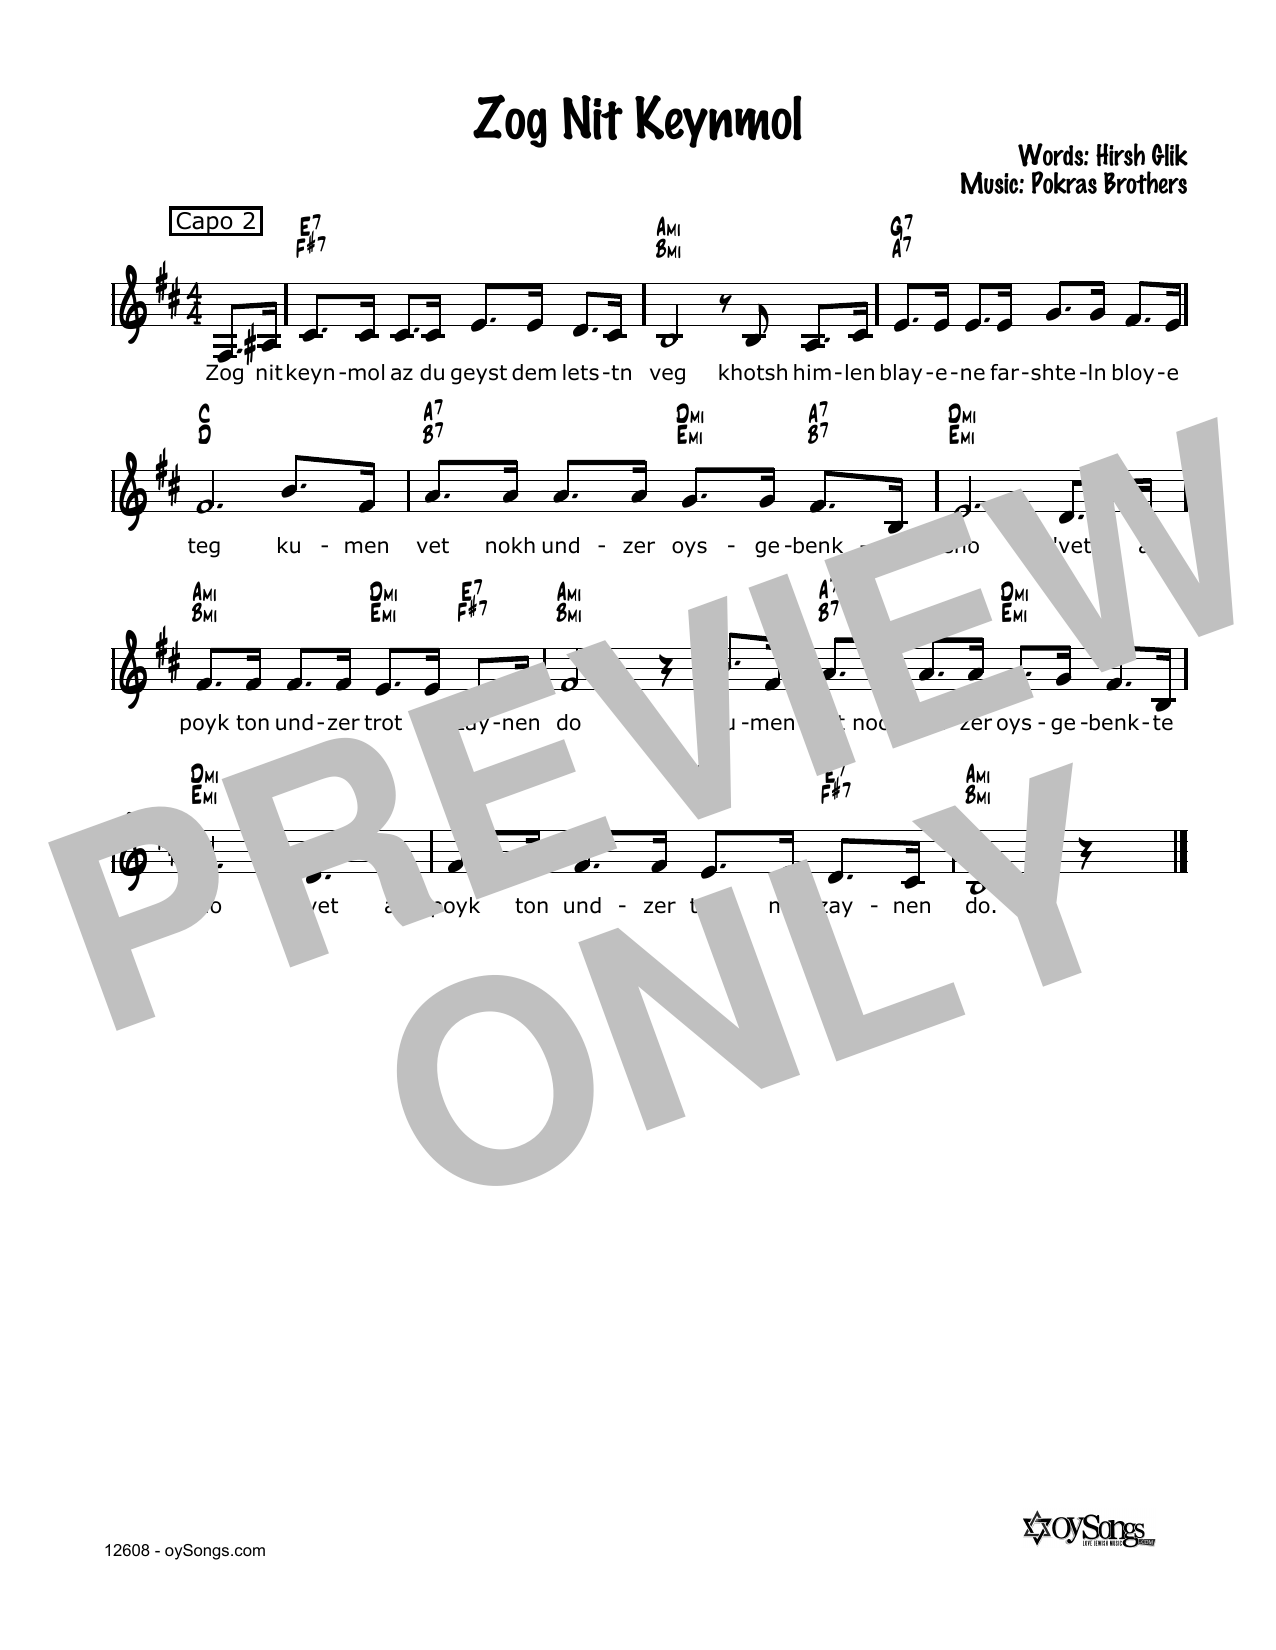 Cindy Paley Zog Nit Keynmol Sheet Music Notes & Chords for Melody Line, Lyrics & Chords - Download or Print PDF